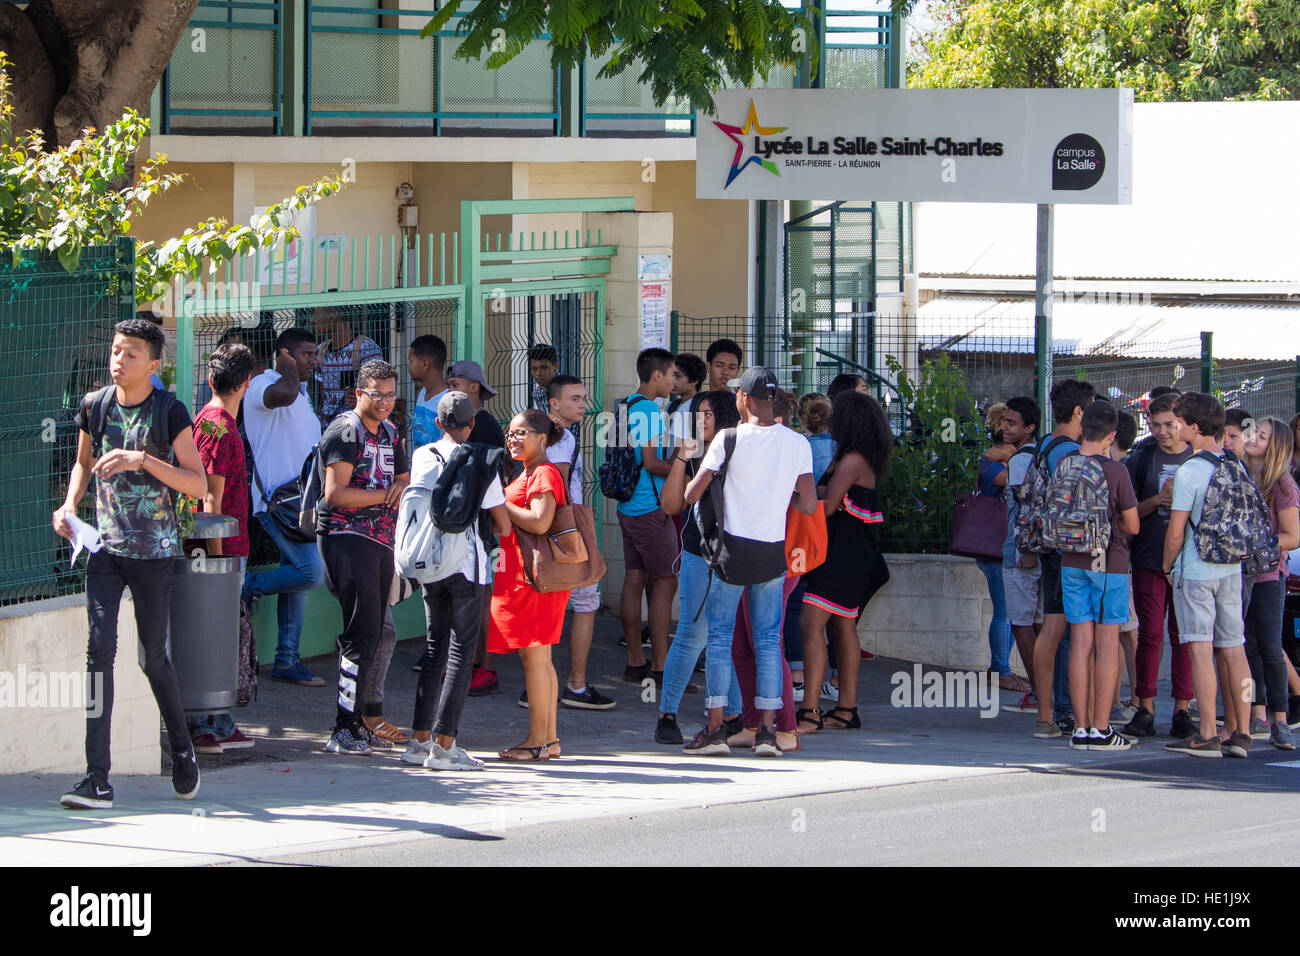 Lycee La Salle Saint-Charles High School, St Pierre, Isola di Reunion Foto Stock